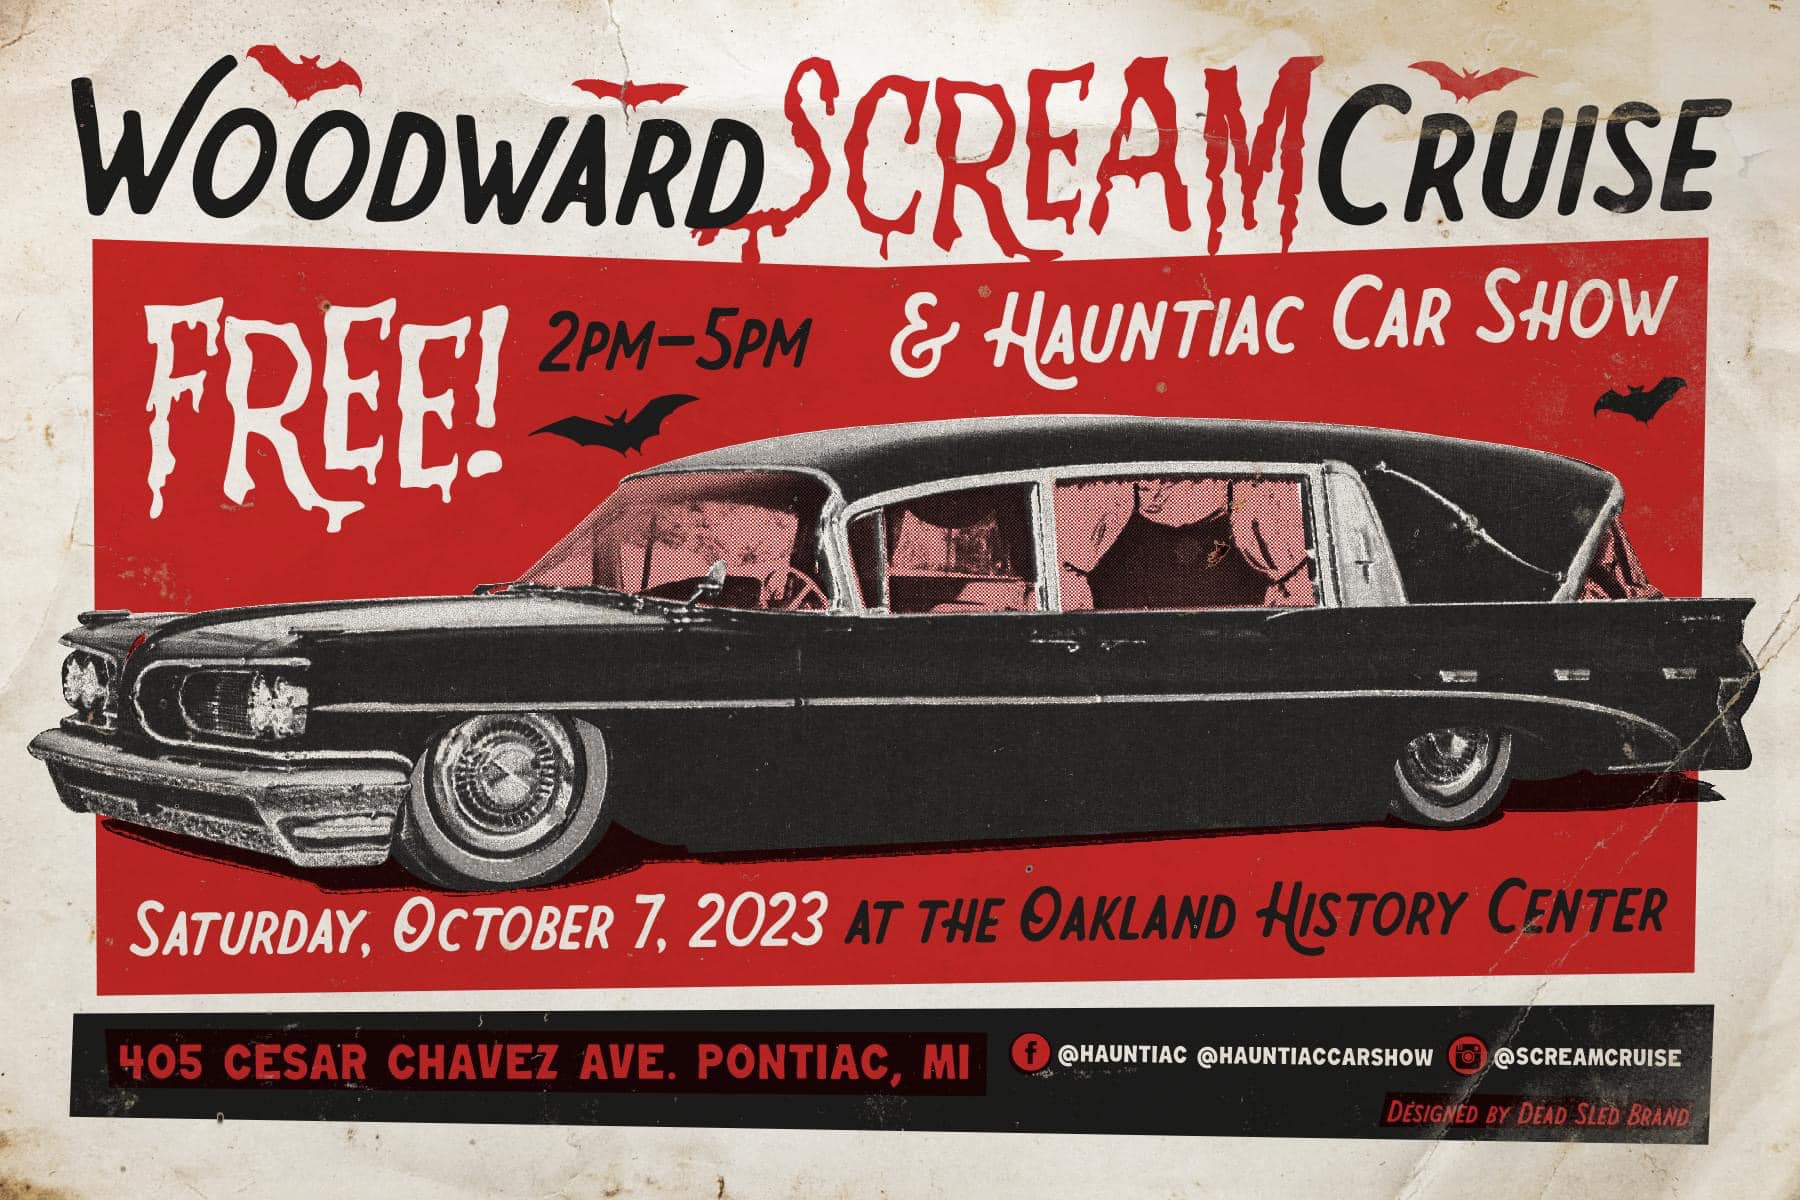 Hauntiac Car Show and Woodward Scream Cruise